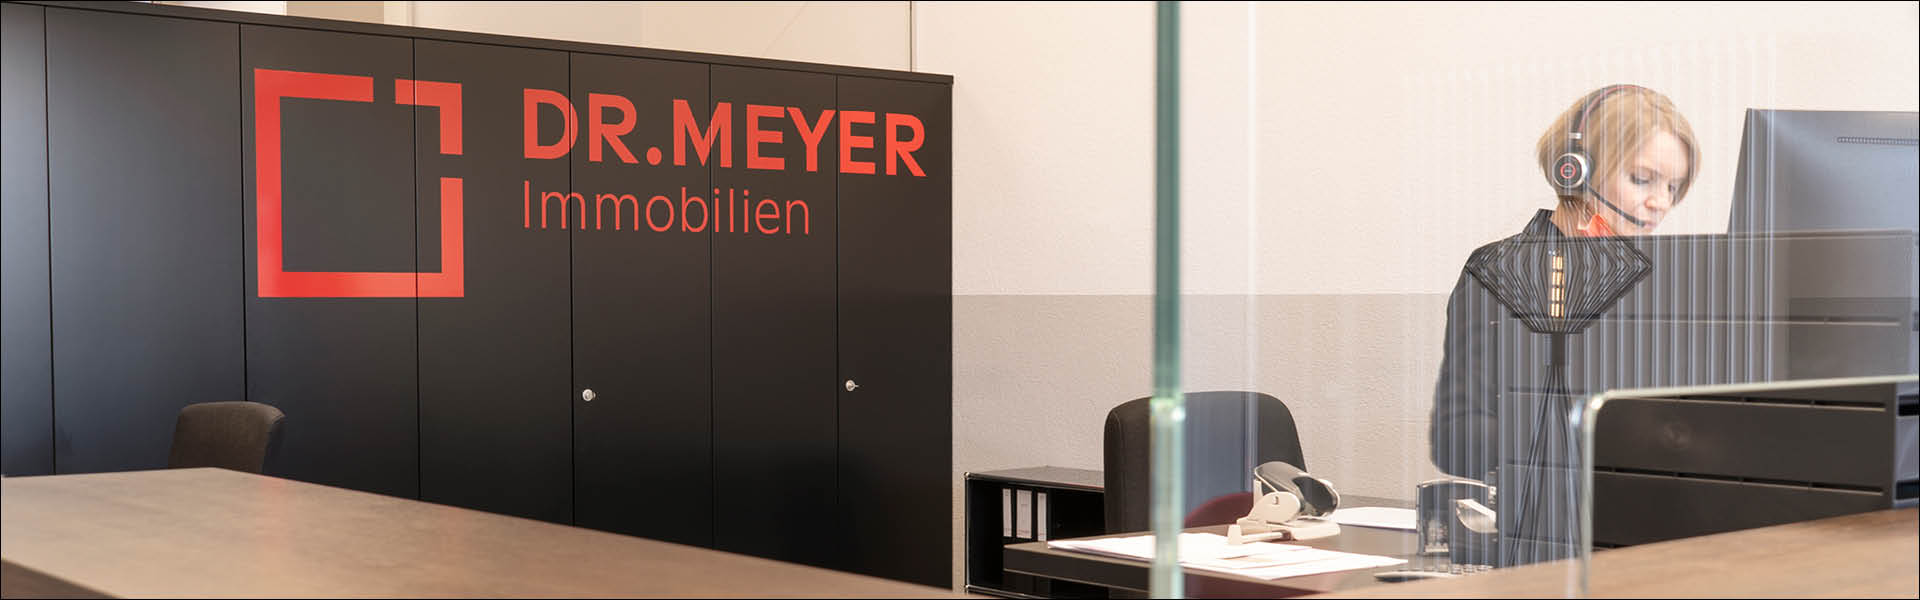 Dr-Meyer-Immobilien-Success-Story-FIVE-Informatik-Header-Bild%202.jpg